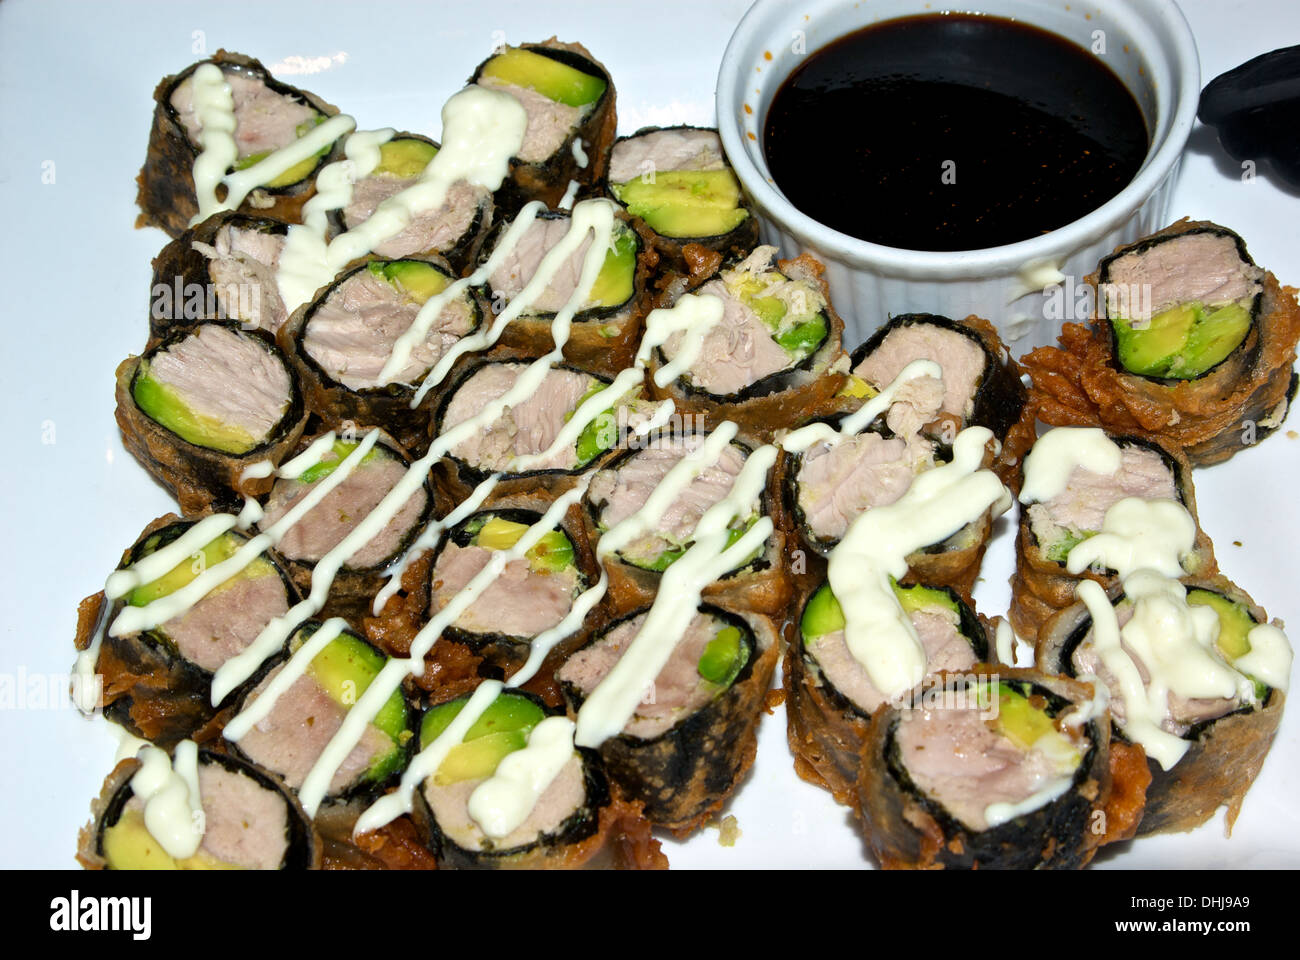 Deep fried battered nori seaweed wrapped albacore tuna avocado sushi slices wasabi mayo drizzle mirin soya sauce dip Stock Photo